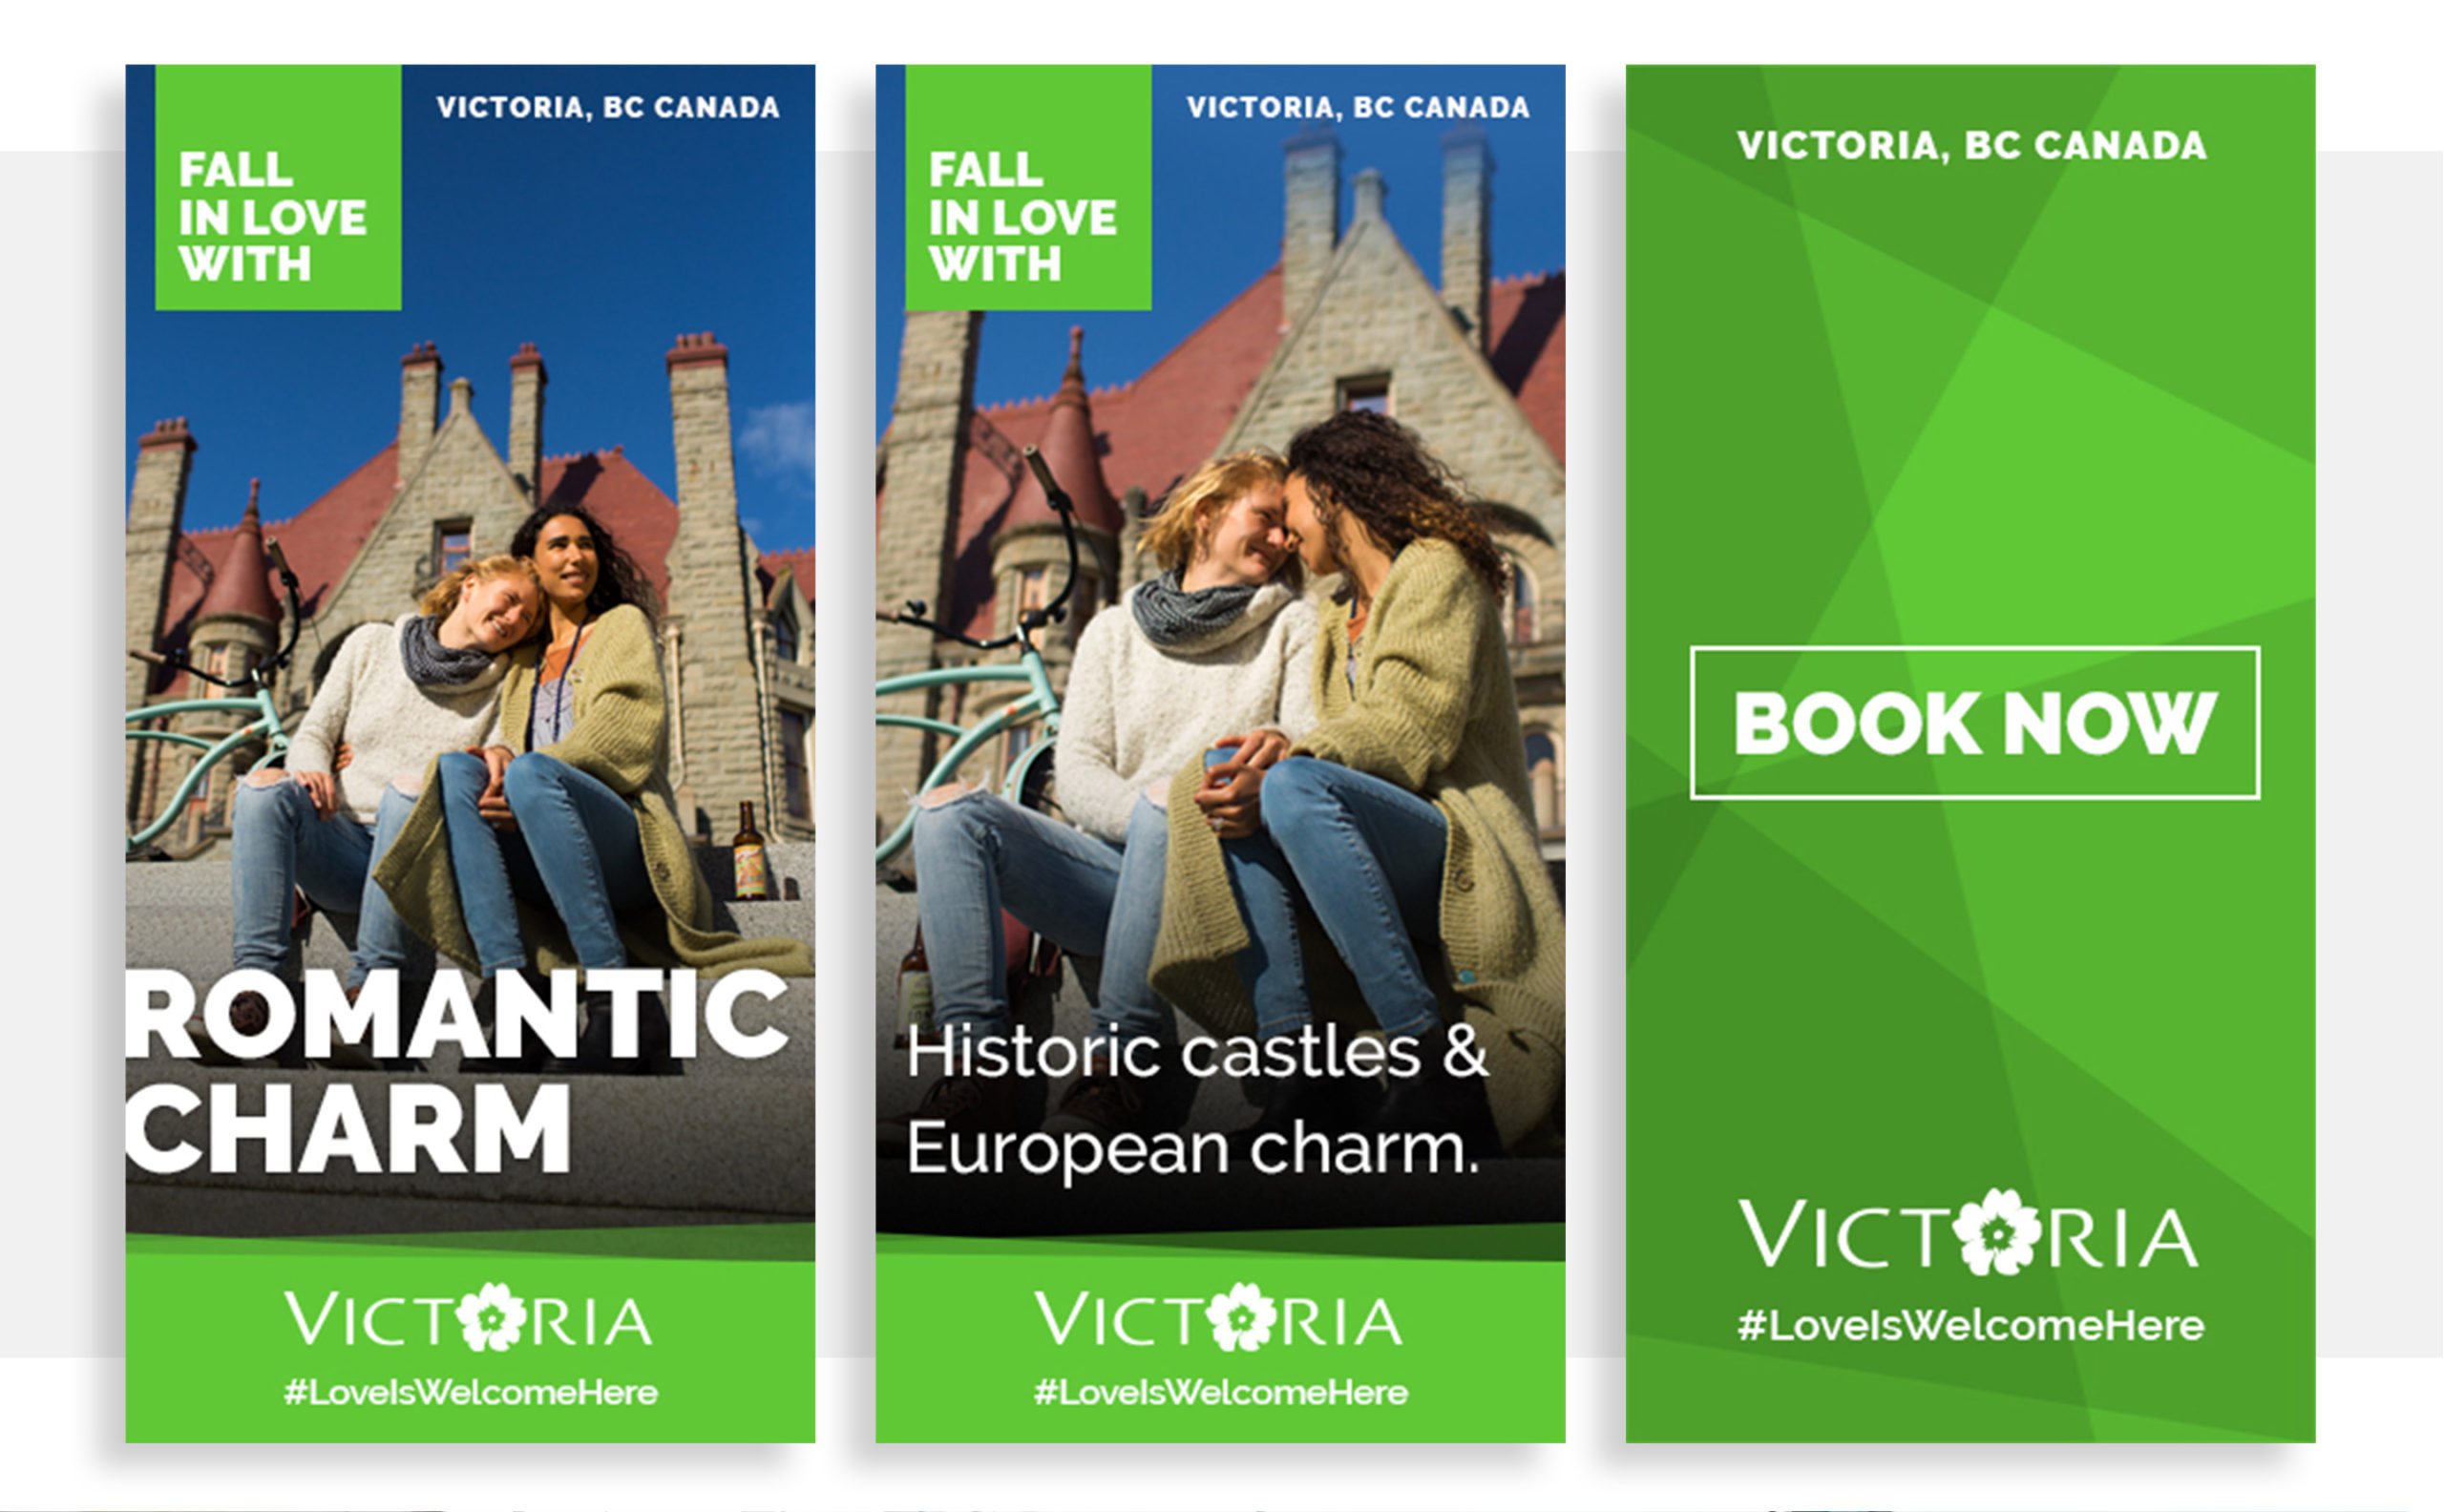 victoria tourism rebate